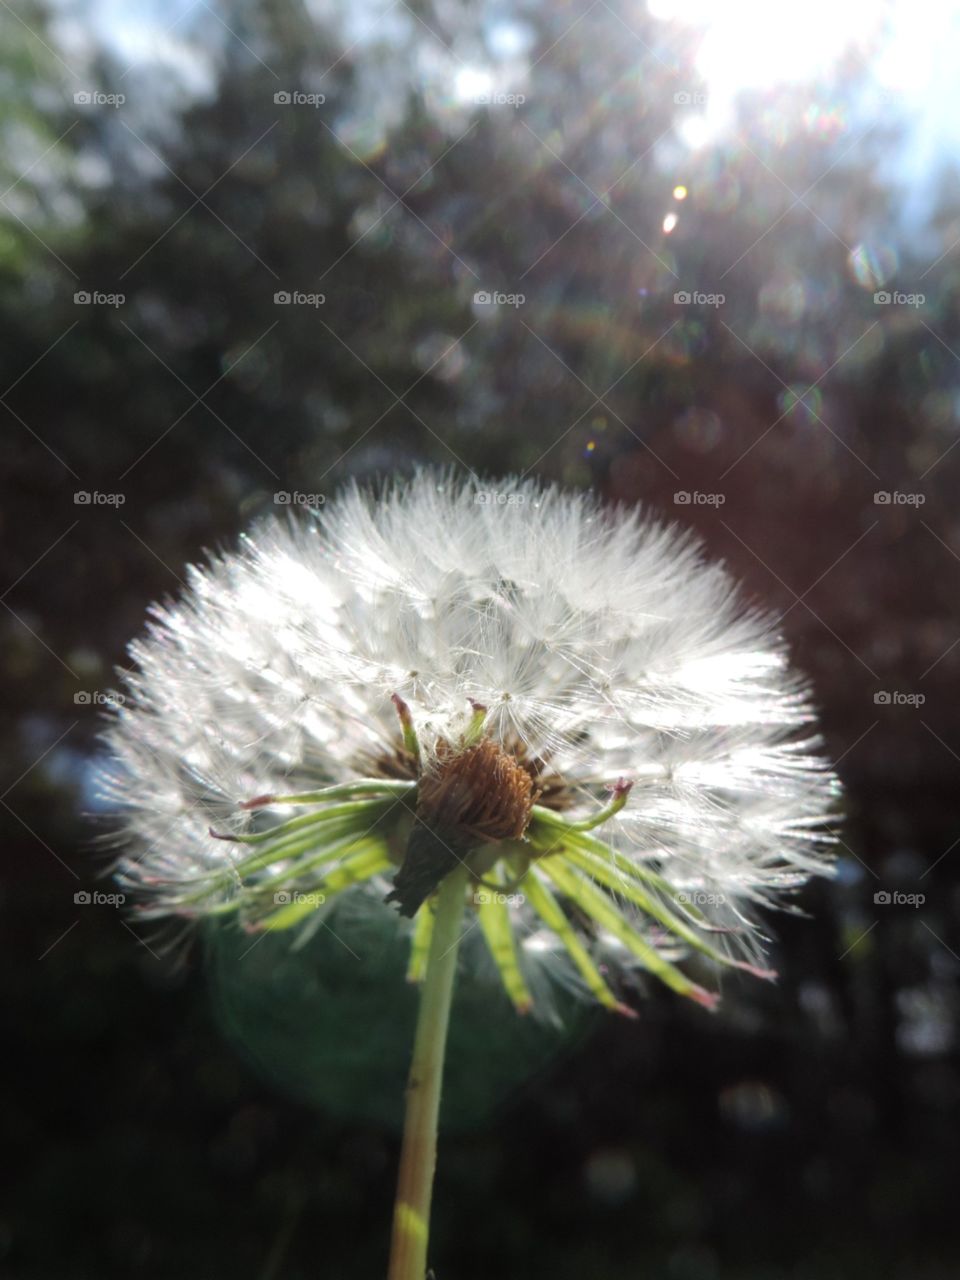 Fluffy. A dandelion puff in shiny sunbeams